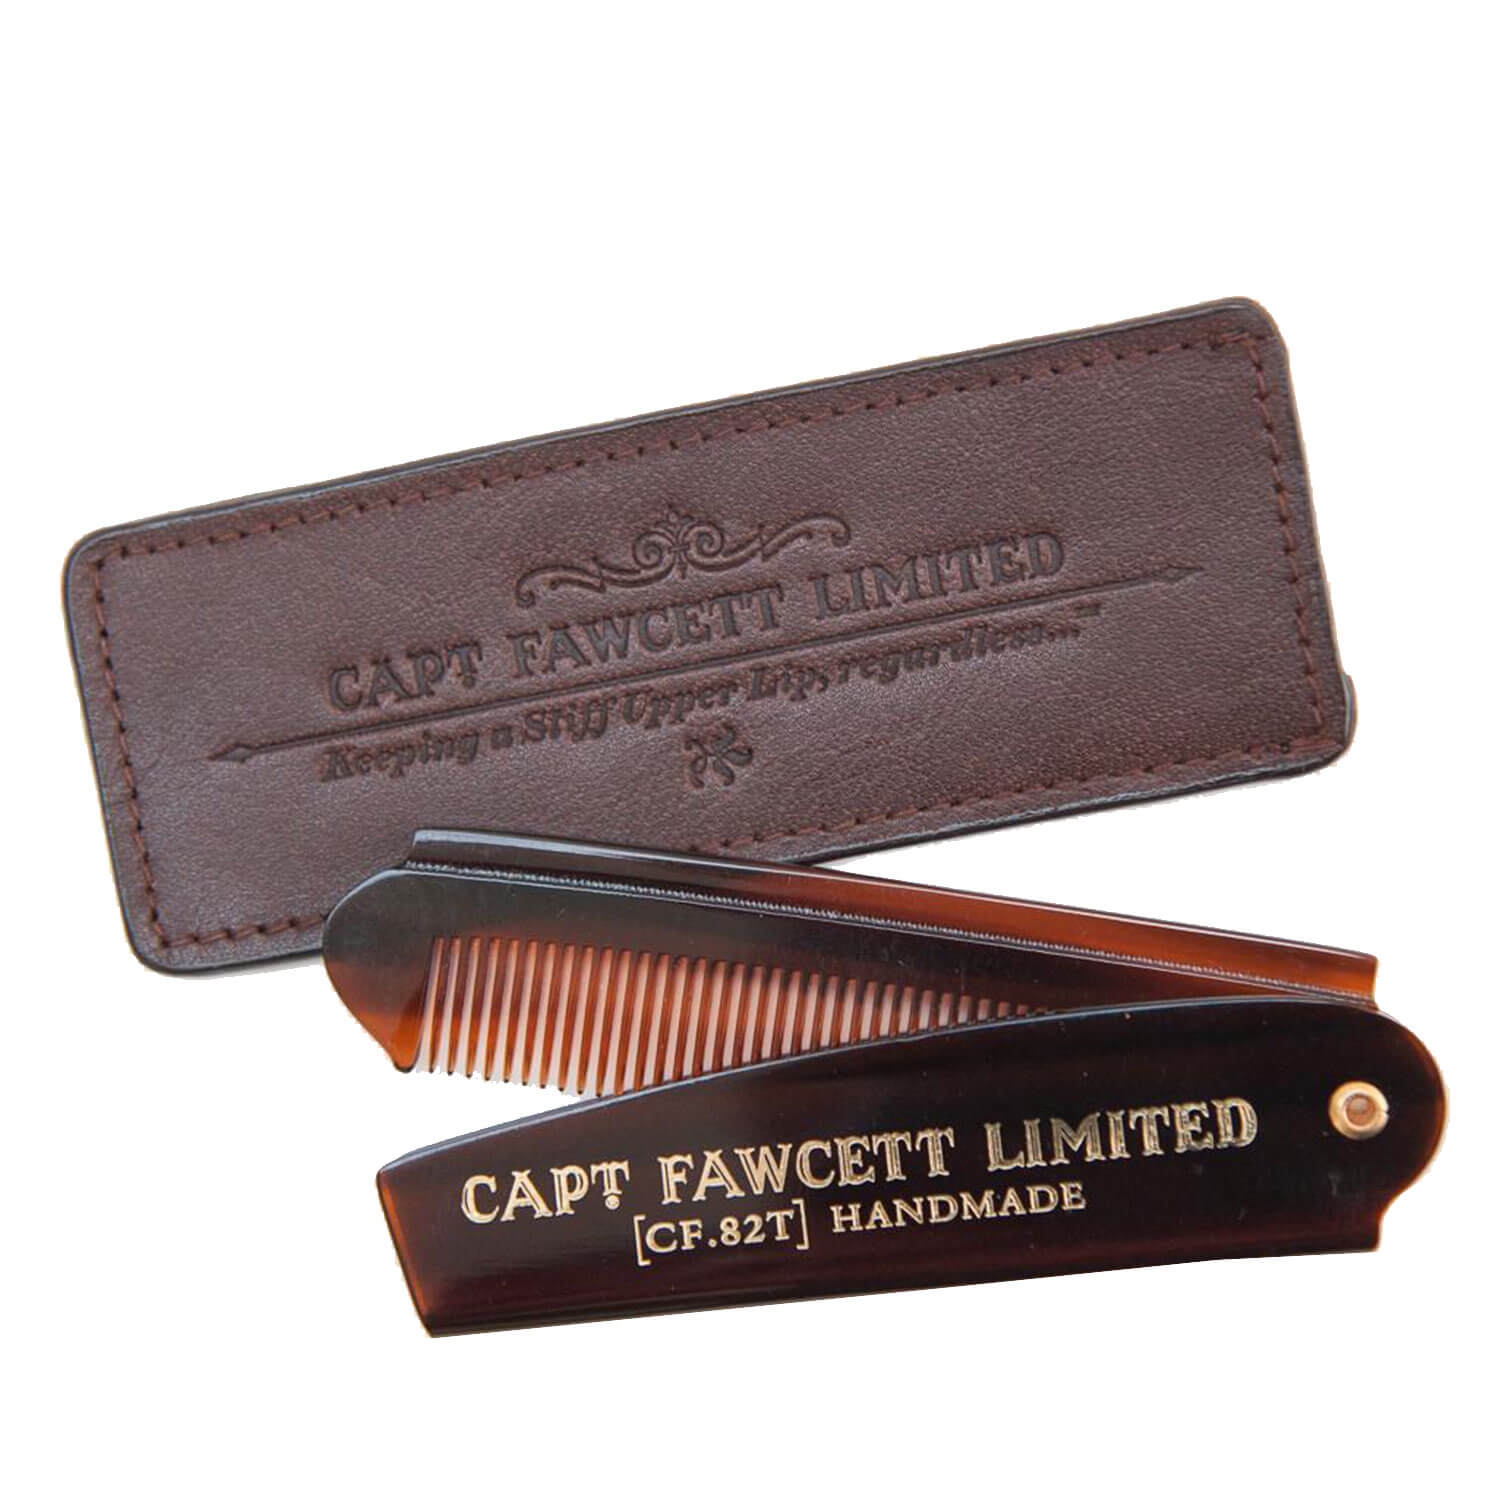 Produktbild von Capt. Fawcett Tools - Folding Pocket Beard Comb with Leather Case